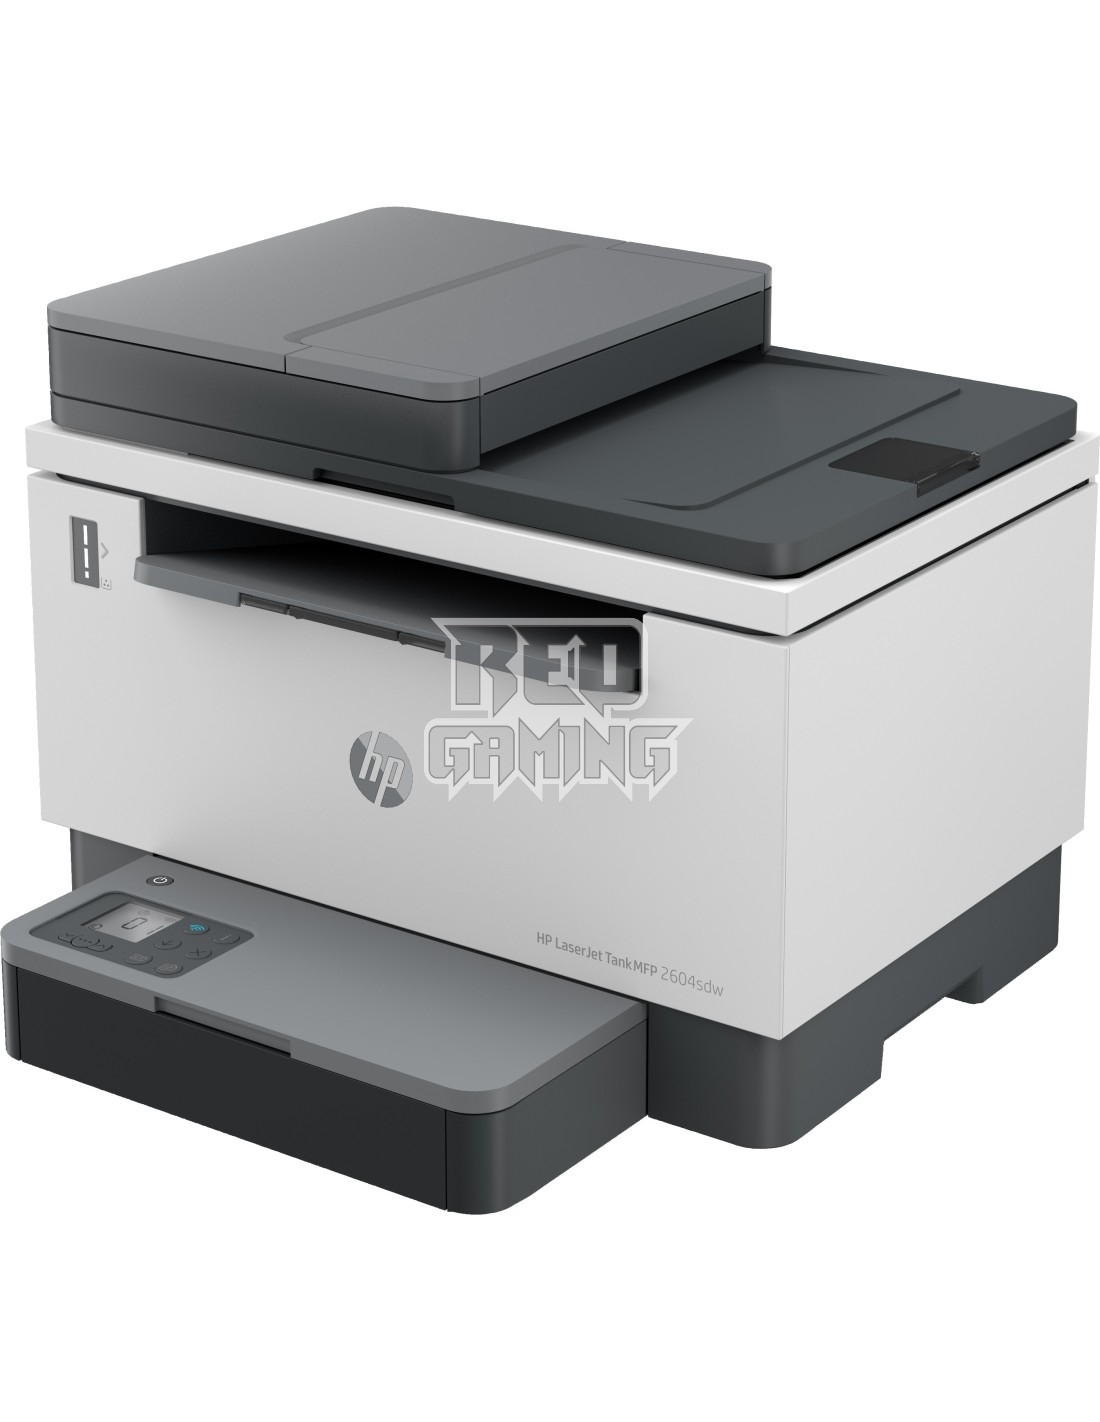 HP LaserJet Stampante multifunzione Tank 2604sdw, Bianco e nero